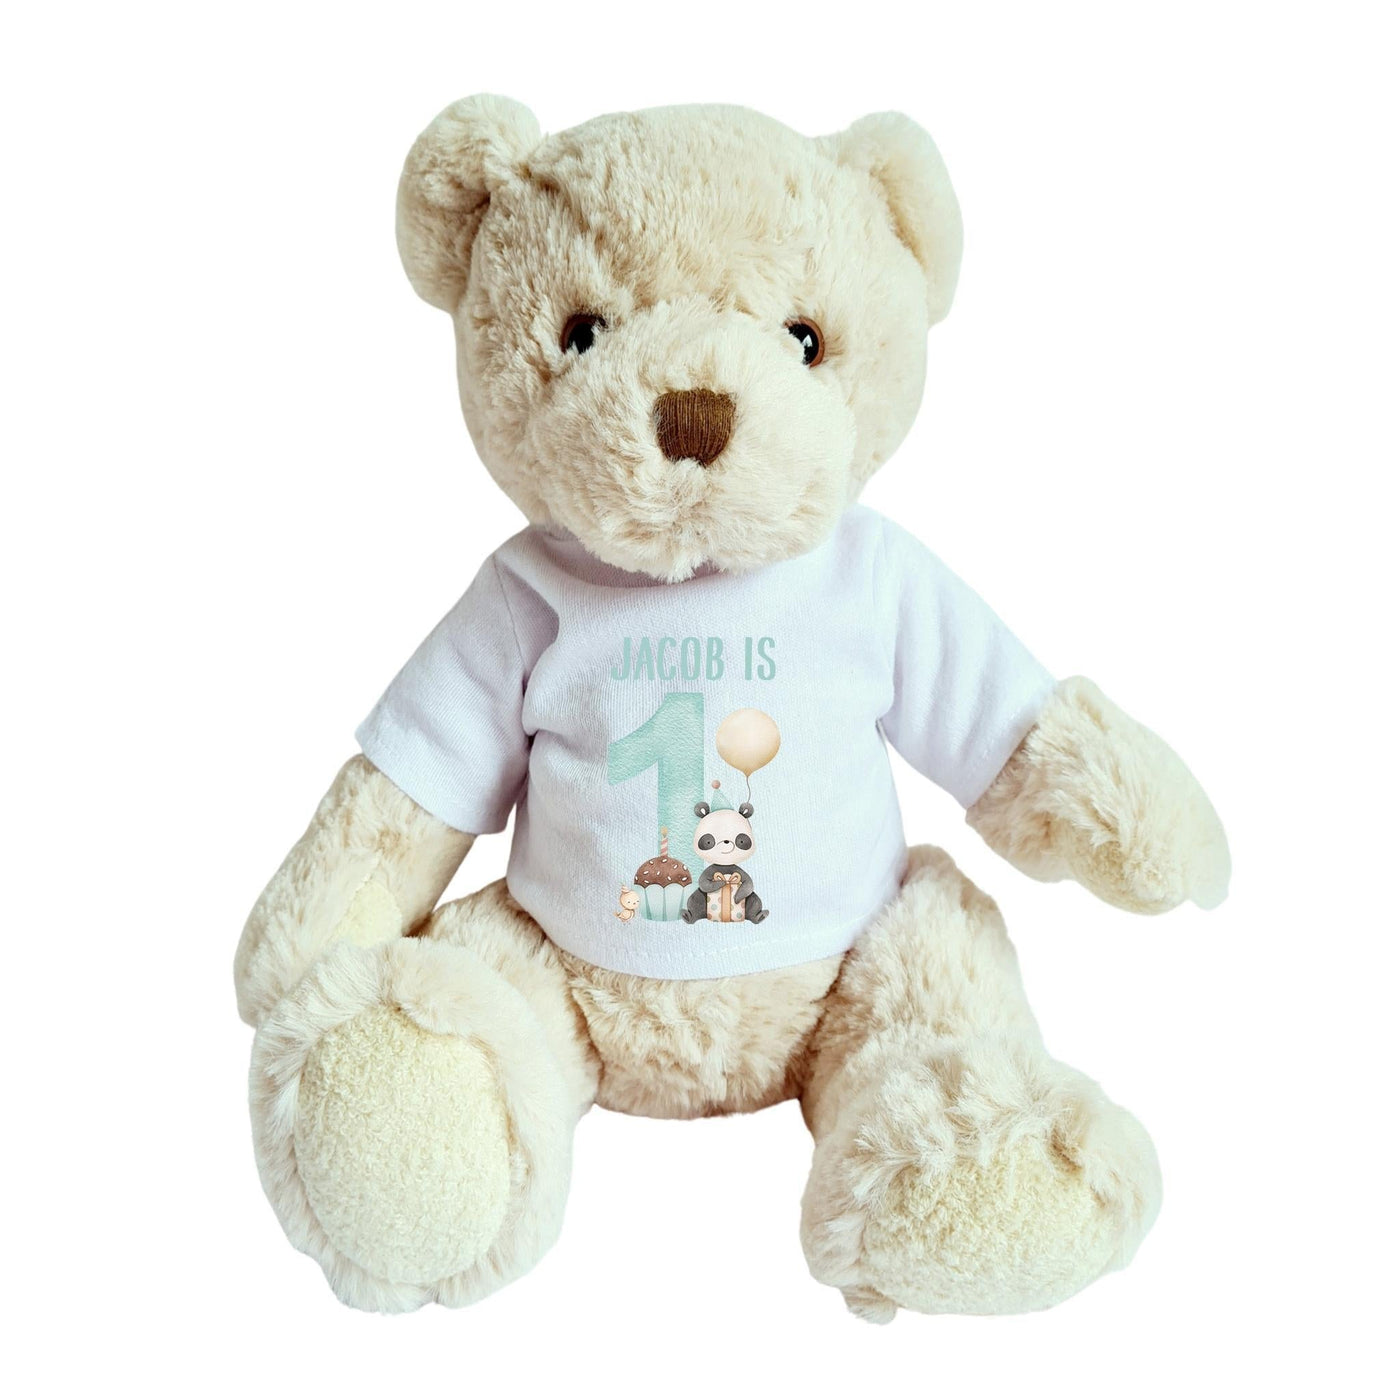 Personalised Boys Luxury Teddy Bear with 1st Birthday Shirt